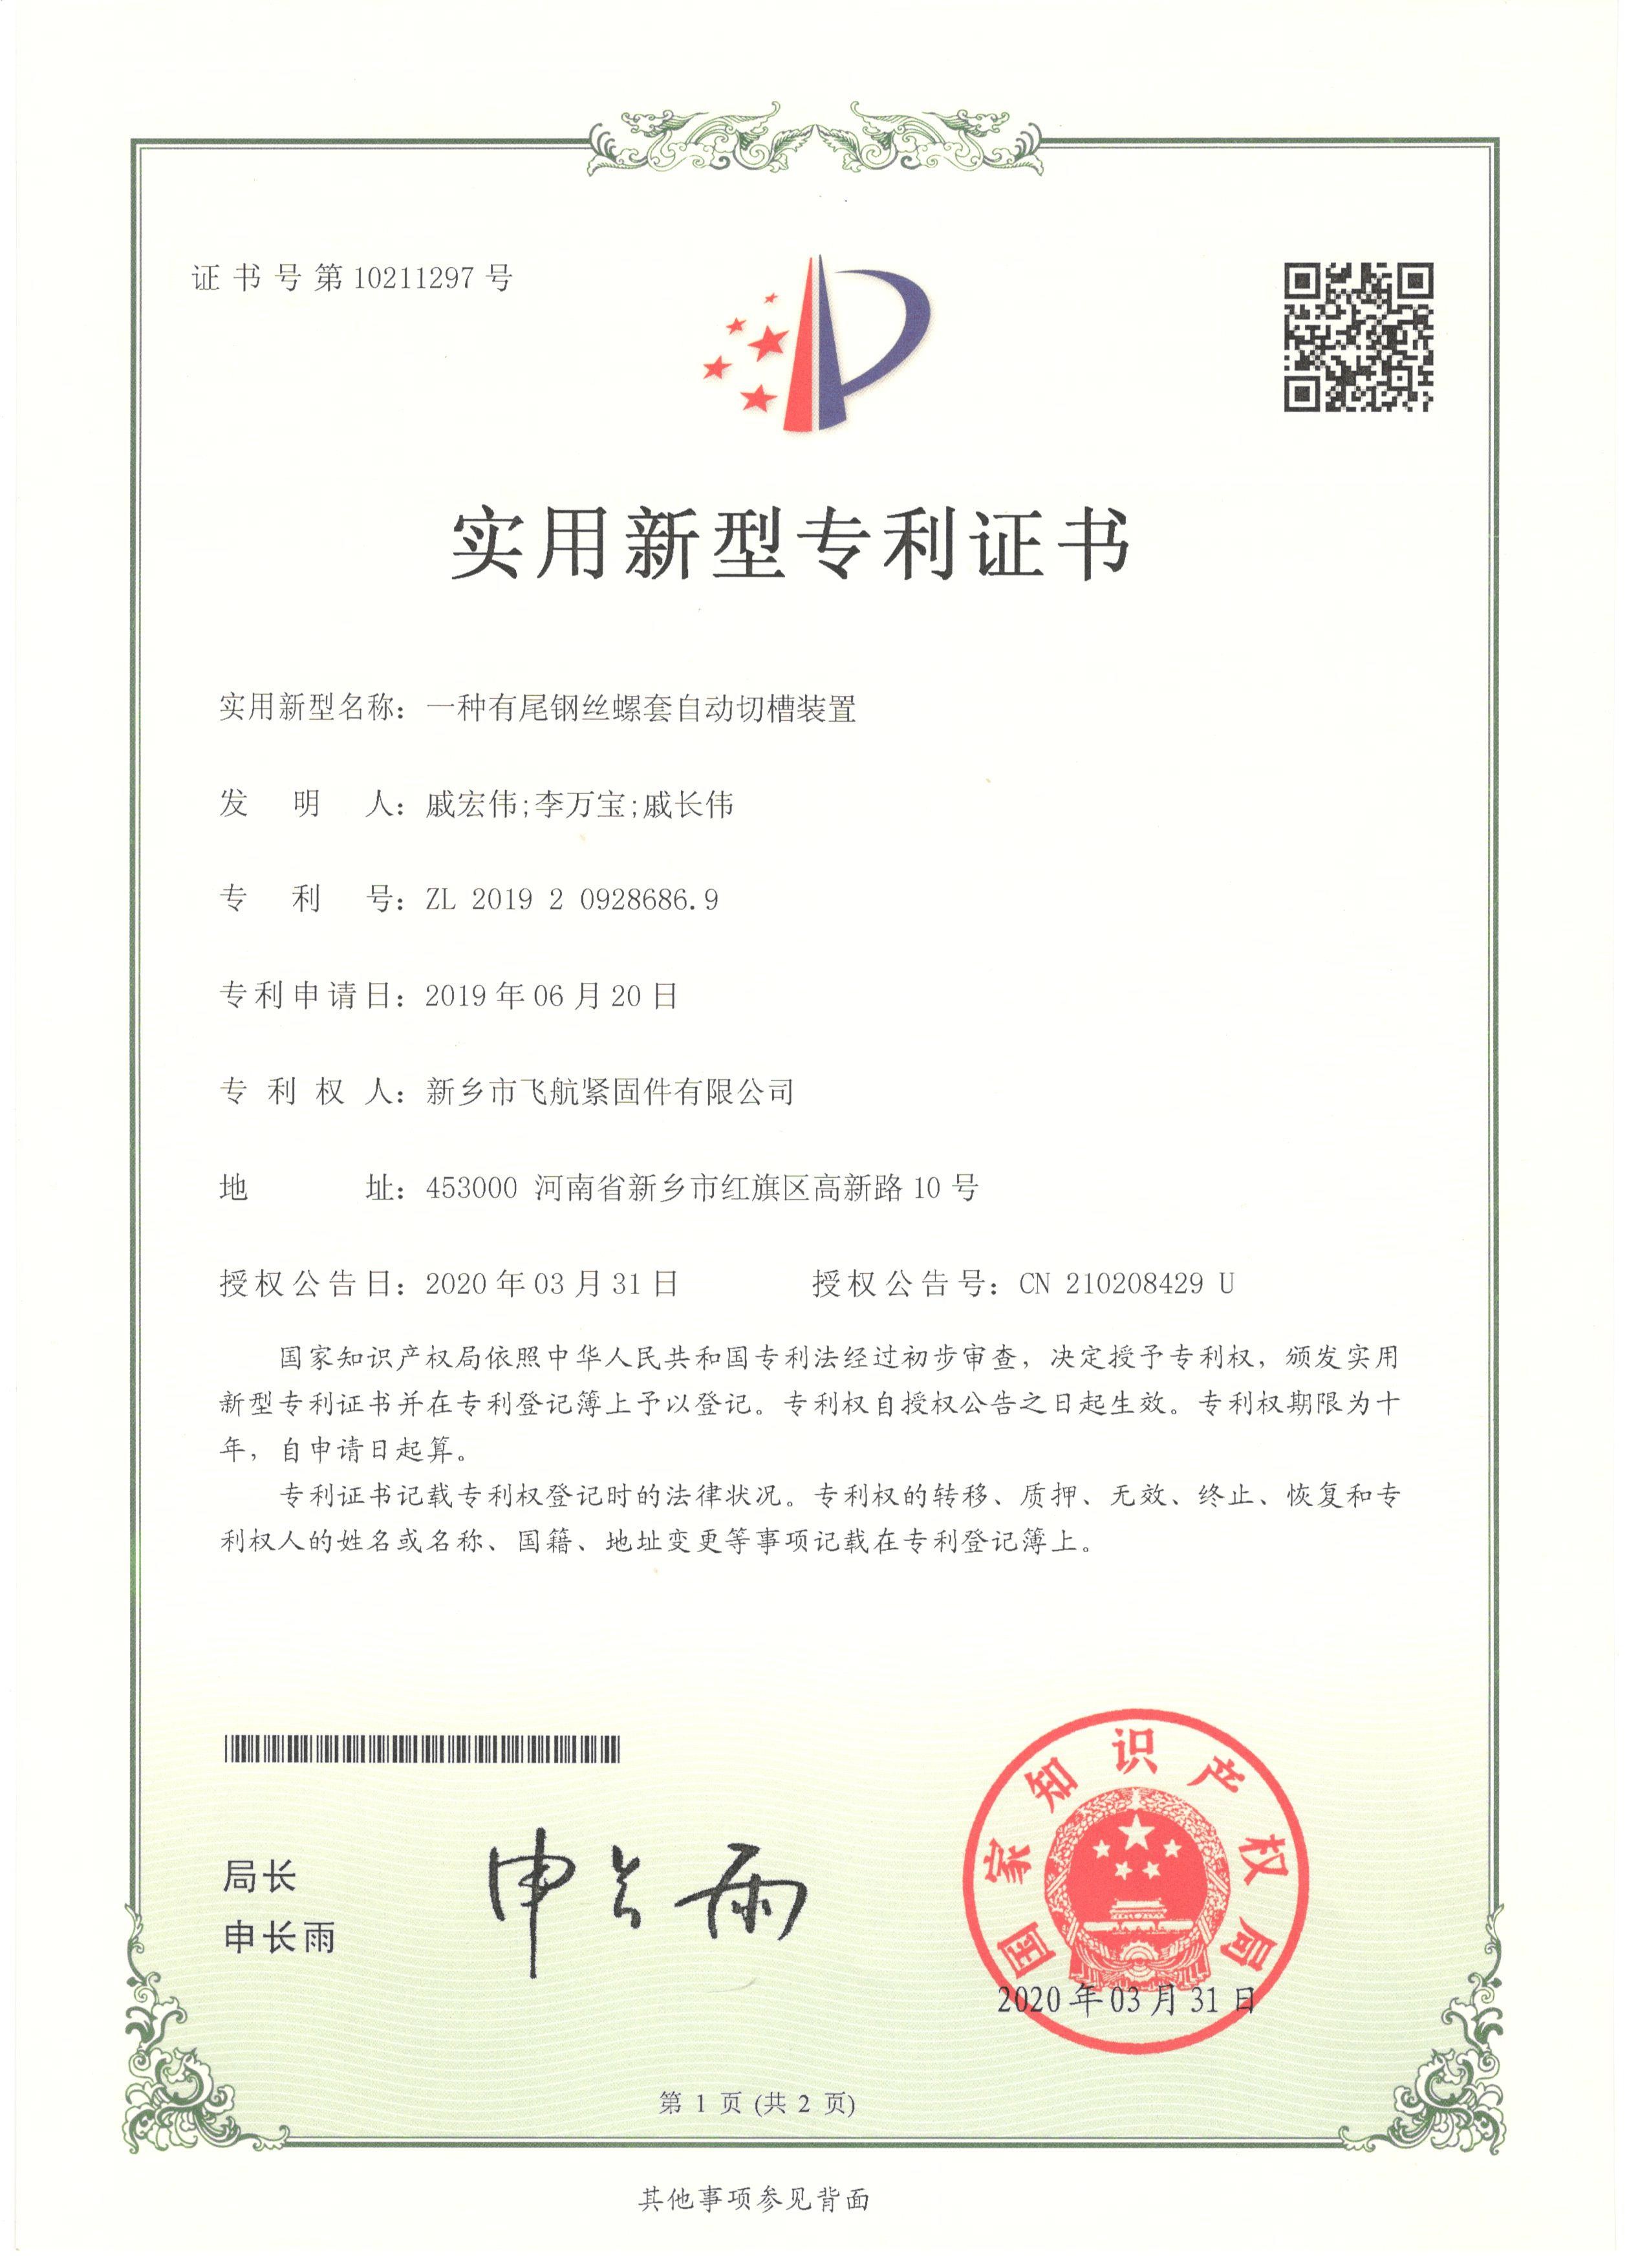 Xinxiang Flight Fasteners Co., Ltd. Certifications